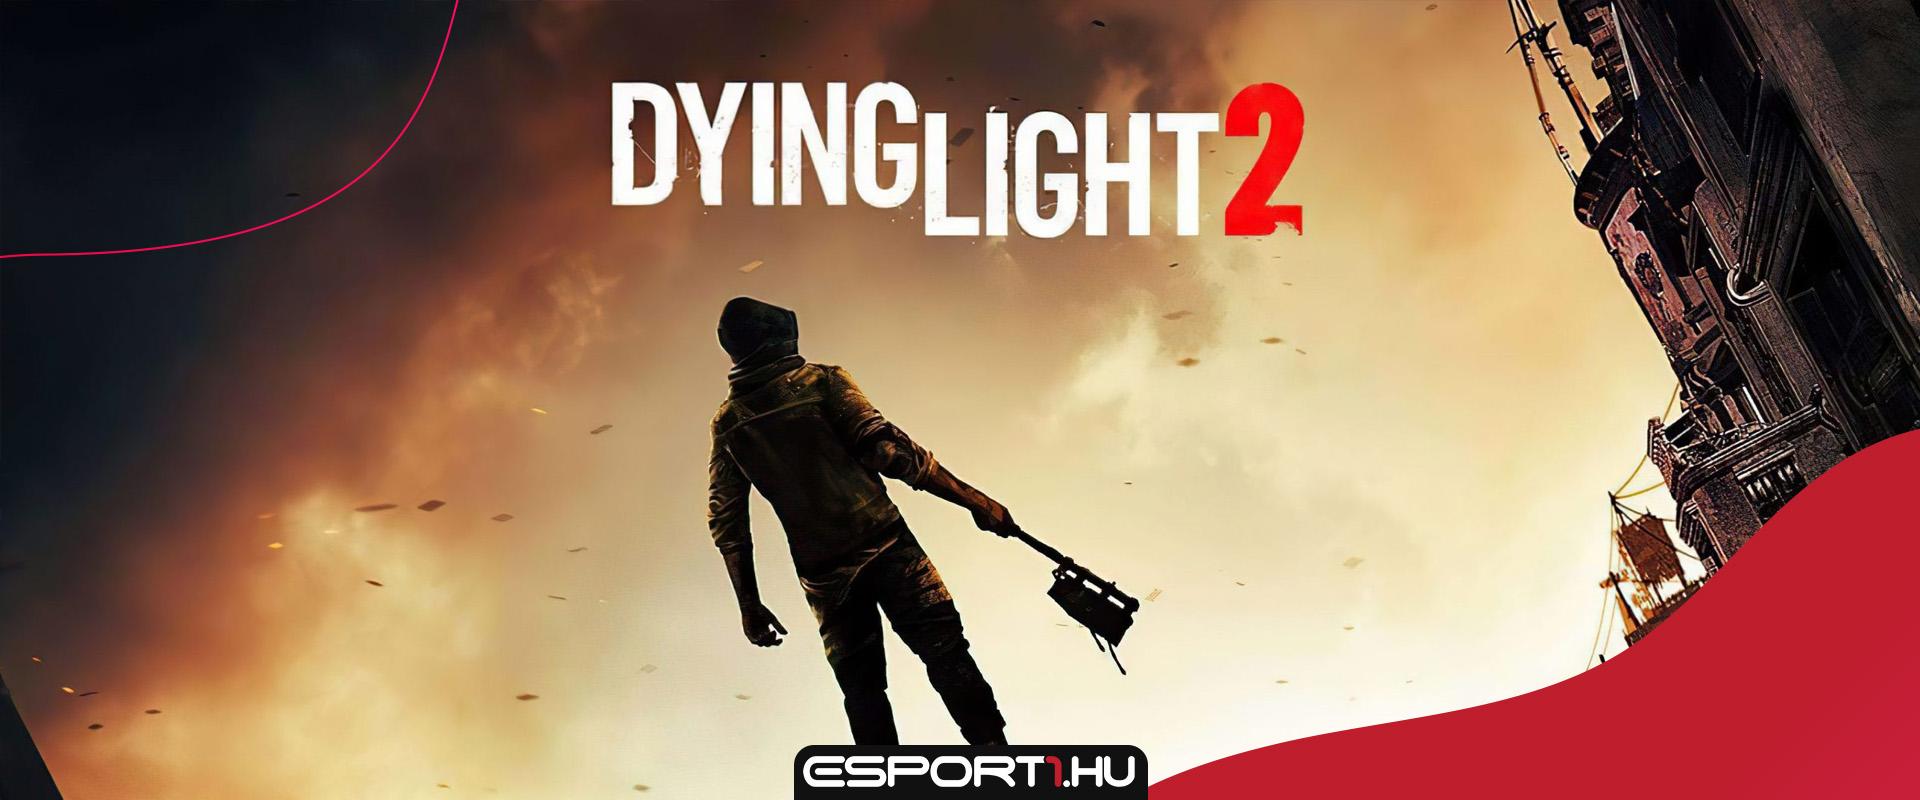 Több óra játék a Dying Light 2-vel